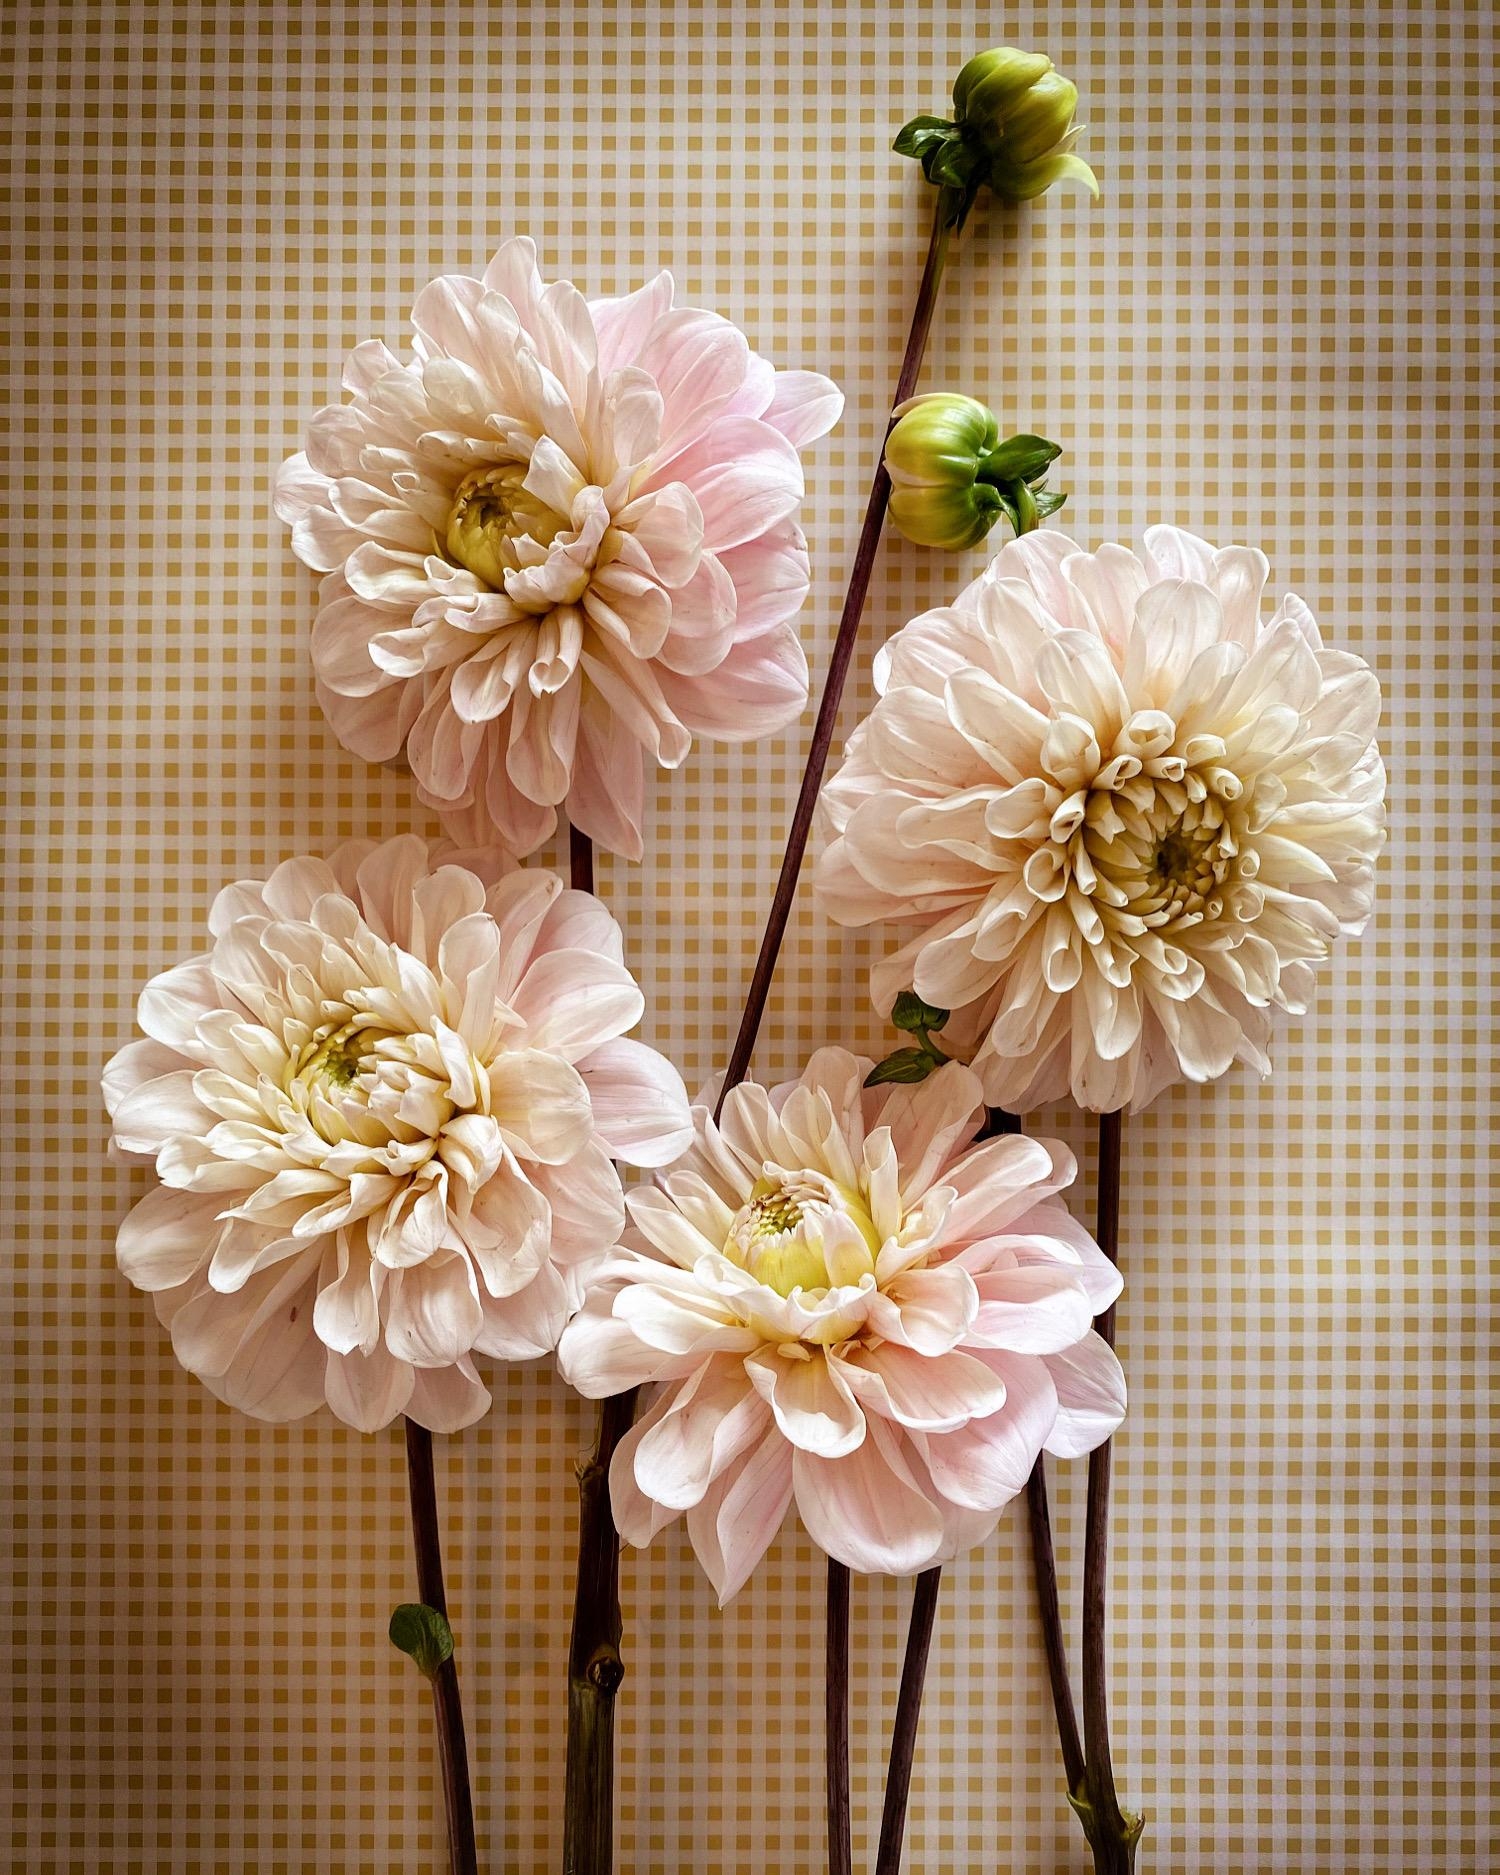 Dahlienliebe 
#flowers#details#dahlia#blumenmädchen#blooms#dahlien